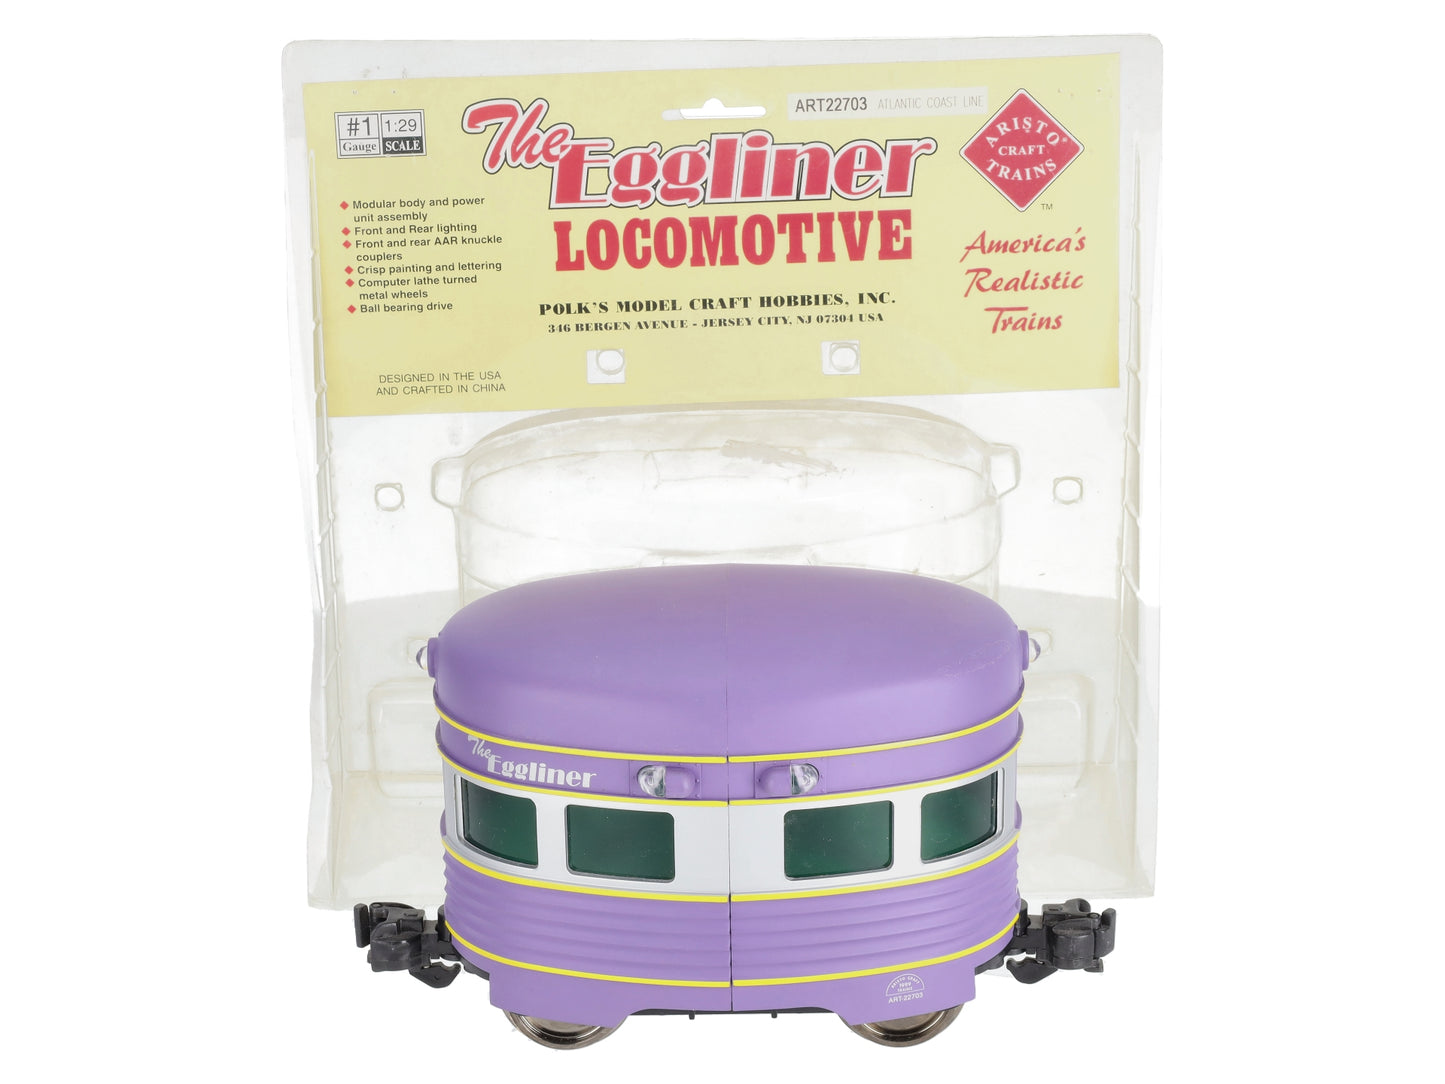 Aristo-Craft 22703 ACL Lil Egg Locomotive